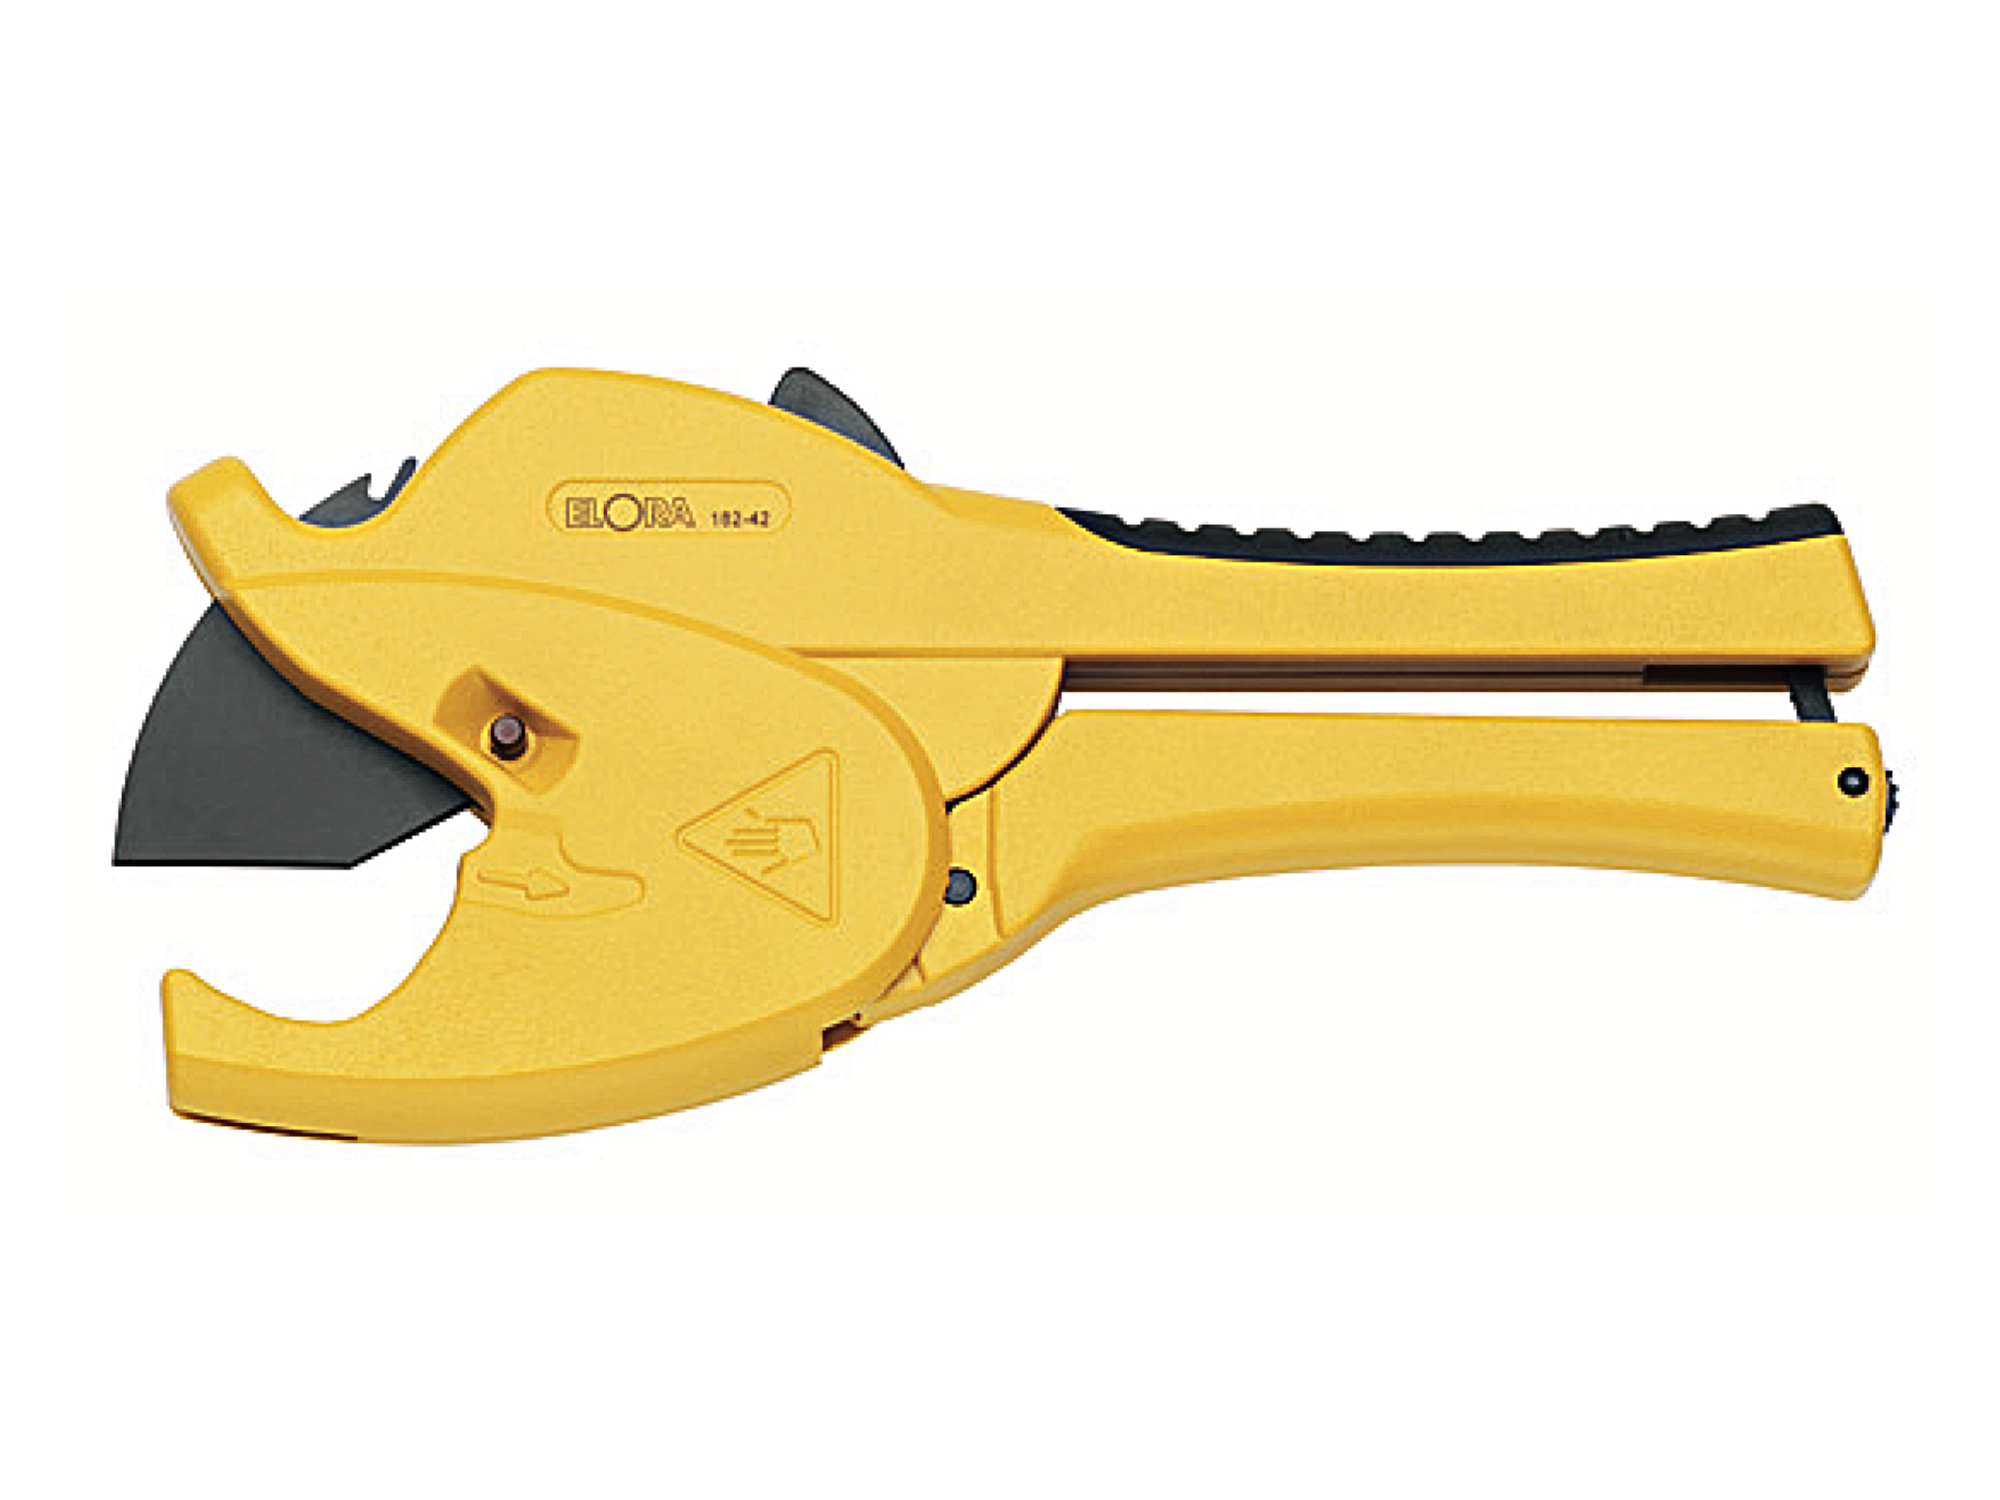 ELORA 182-E 42 Plastic Pipe Cutter/Scissors Spare Blade - Premium Pipe Cutter from ELORA - Shop now at Yew Aik.